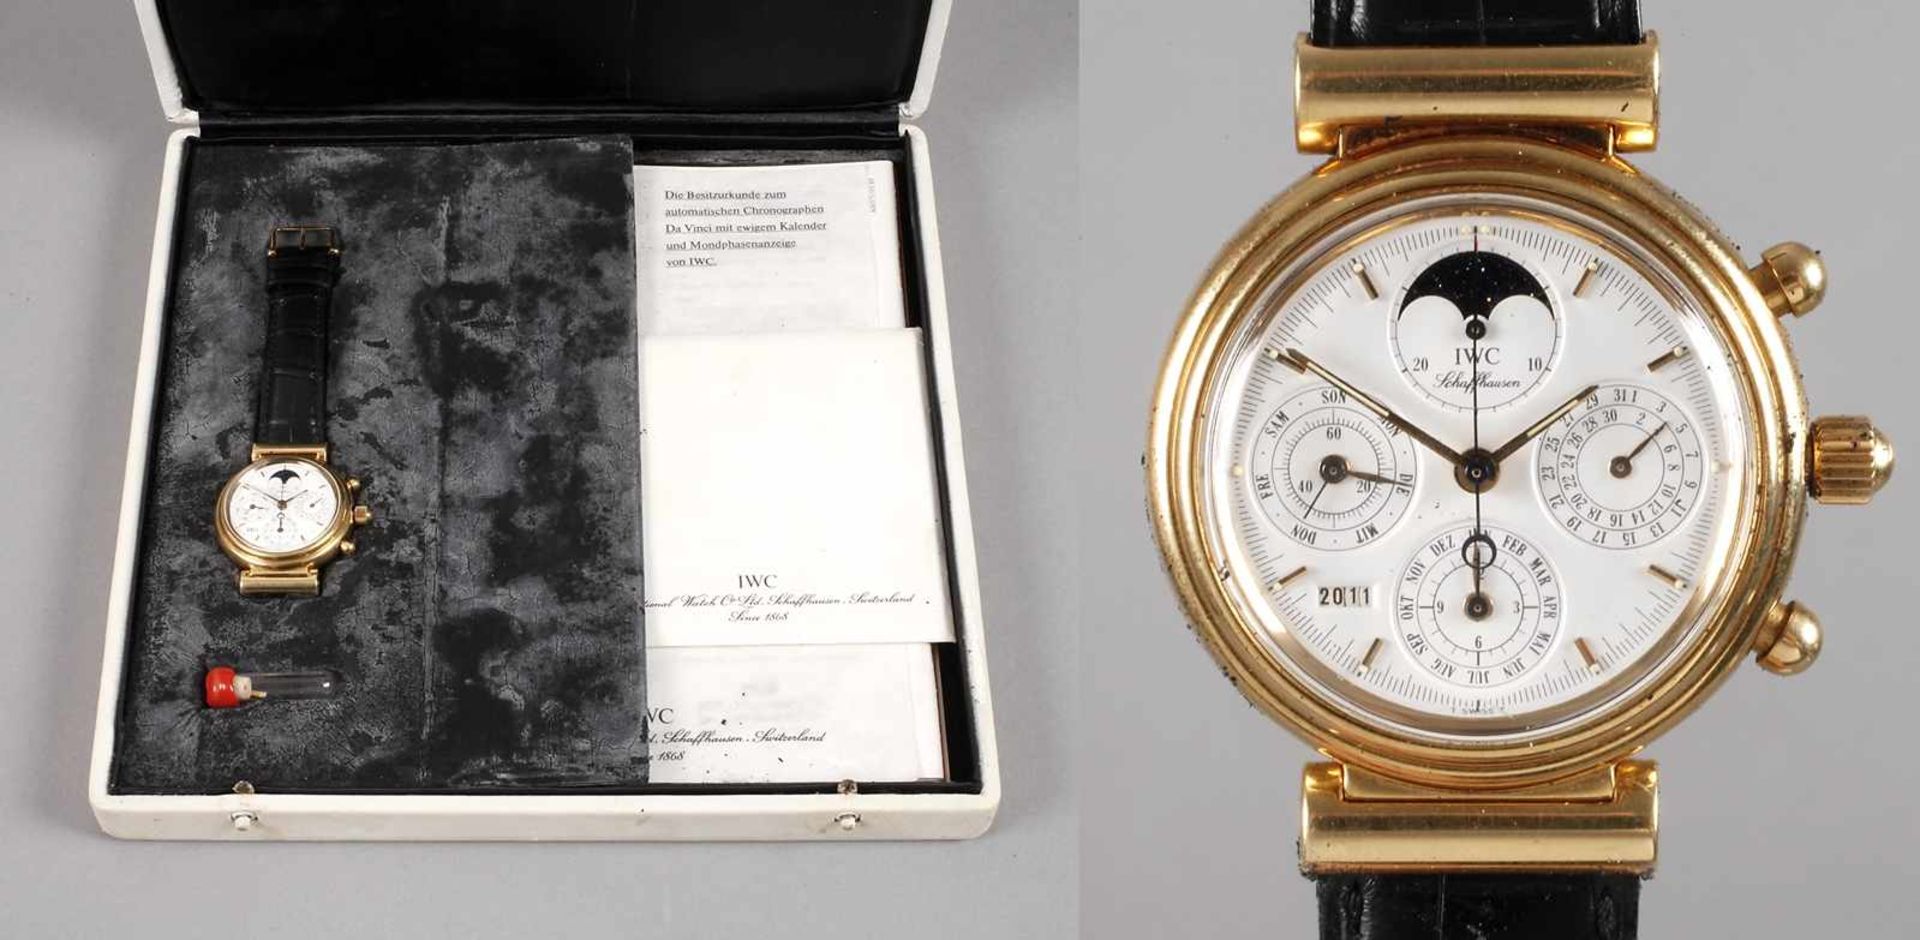 IWC Herrenarmbanduhr "Da Vinci"seltene astronomische Herrenarmbanduhr mit ewigem Kalender und